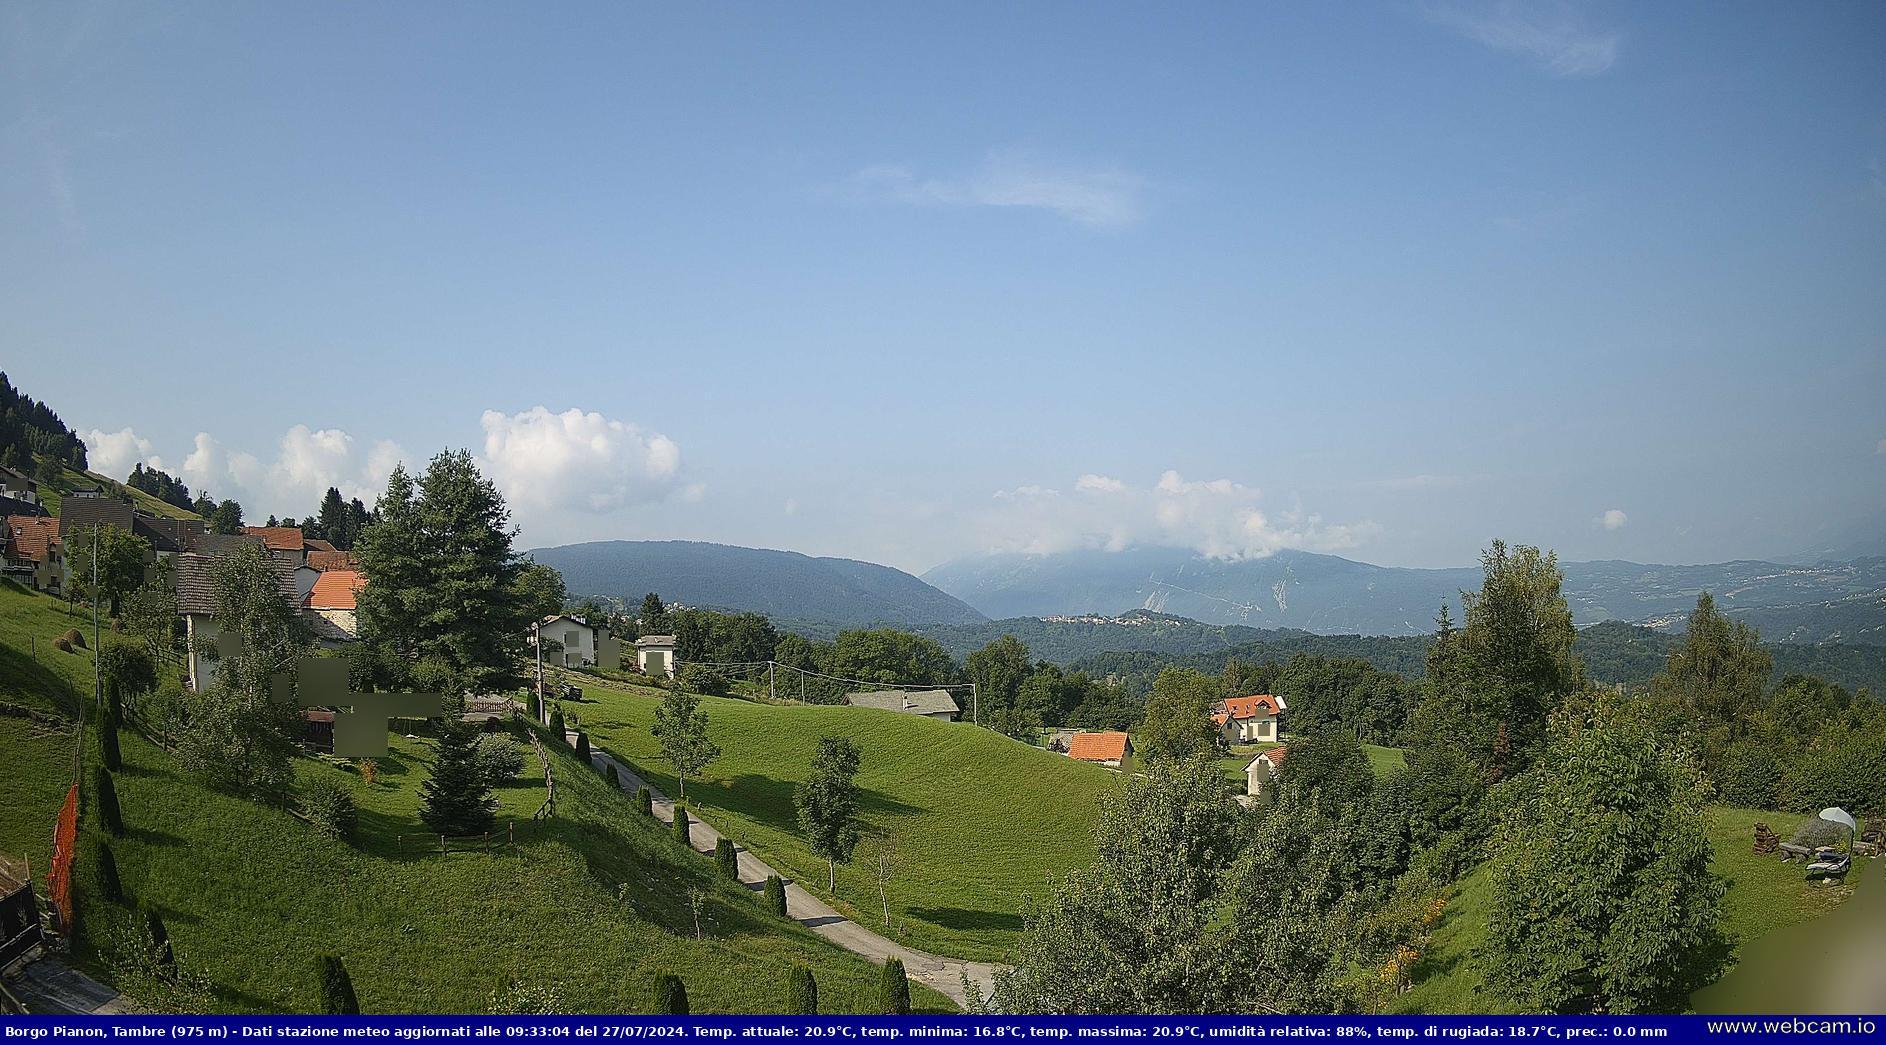 time-lapse frame, Borgo Pianon (Tambre - BL) - 975m webcam